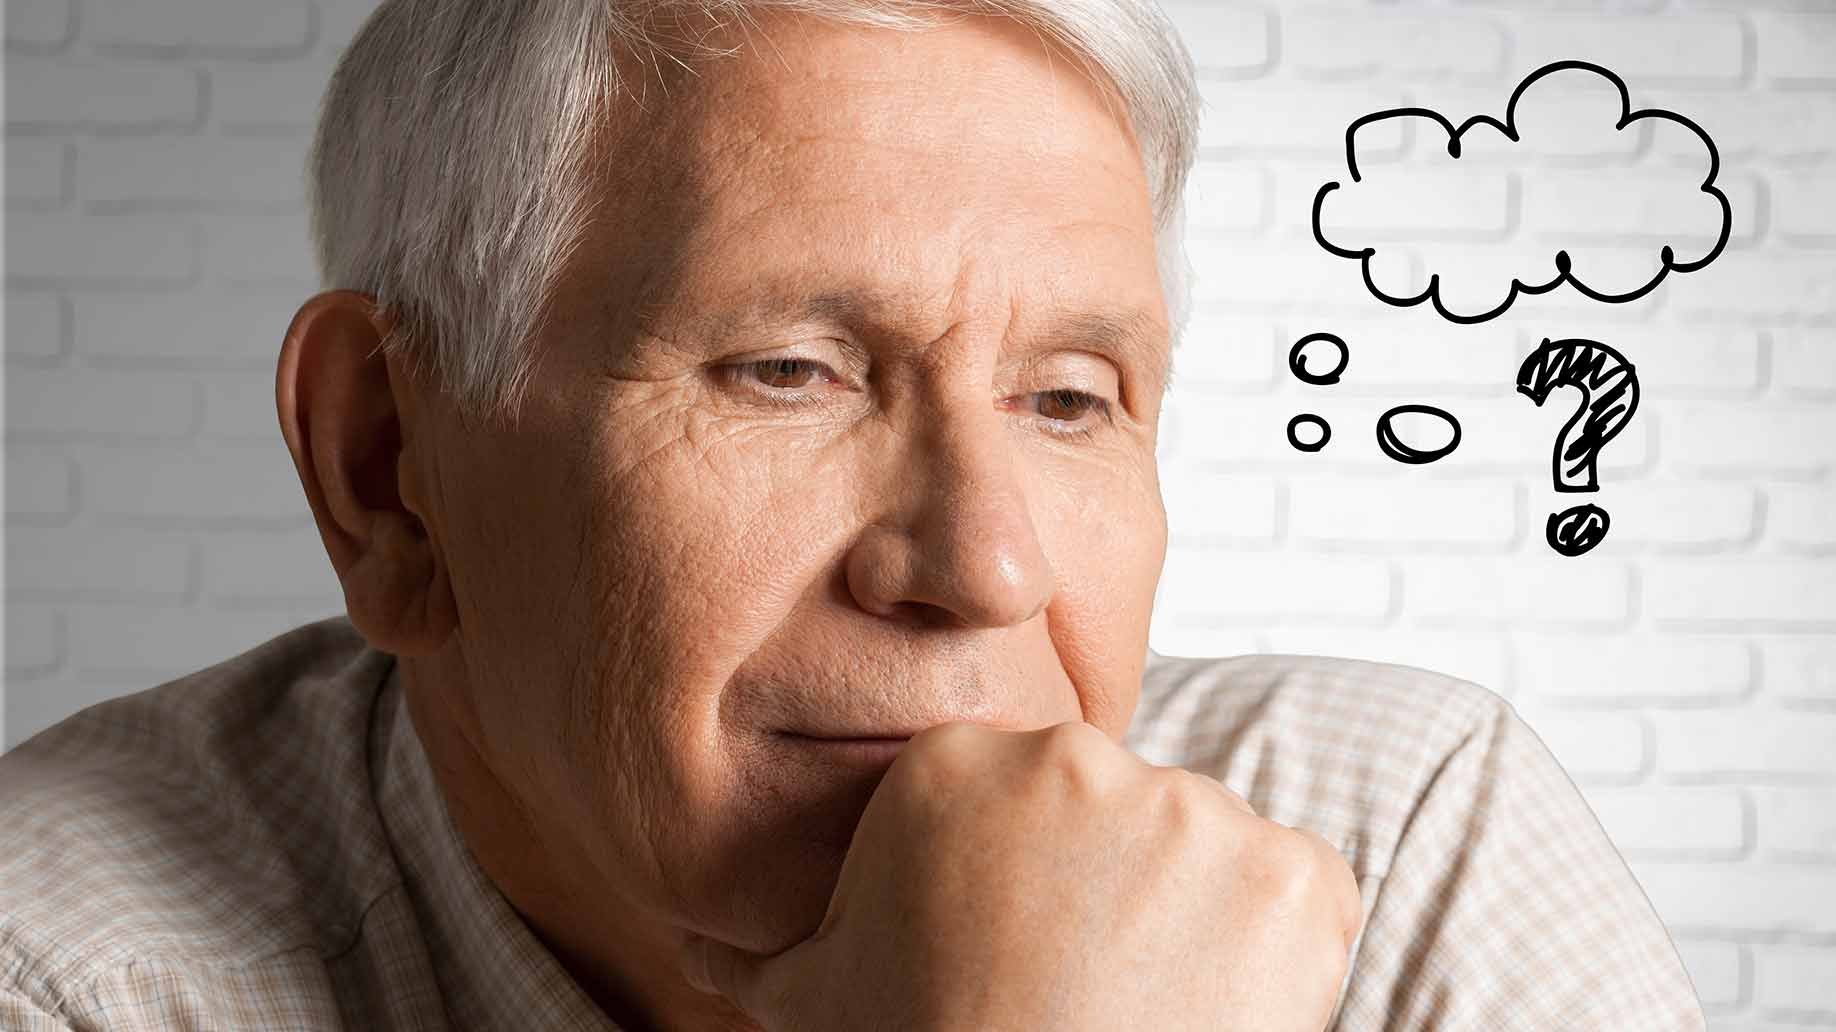 Alzheimers disease dementia forgetful memory brain disorder elderly natural remedies turmeric curcimun health benefits